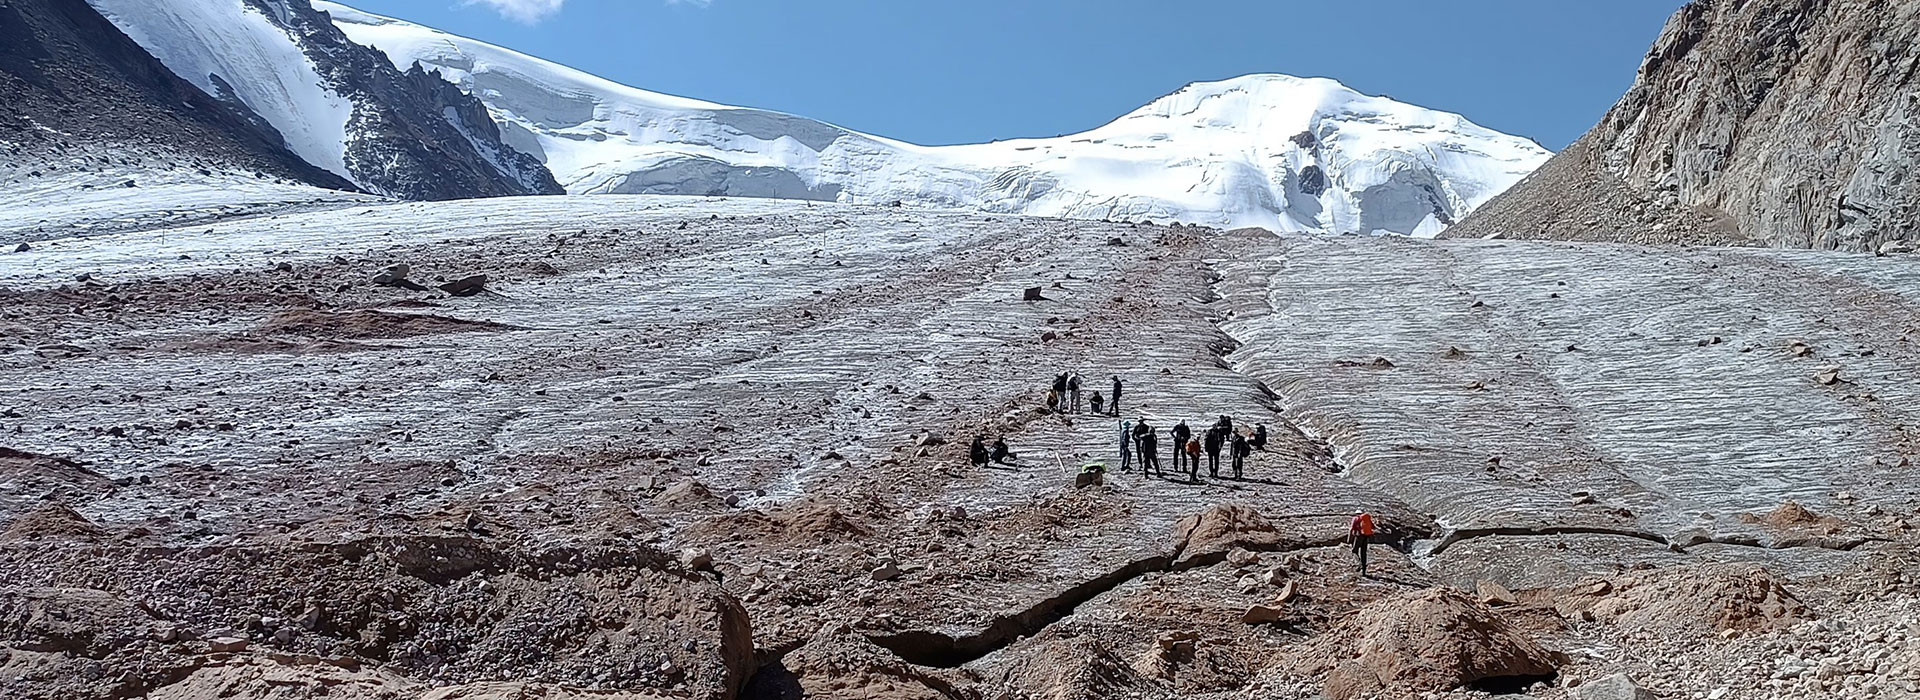 A glacier in a barren mountain landscape.